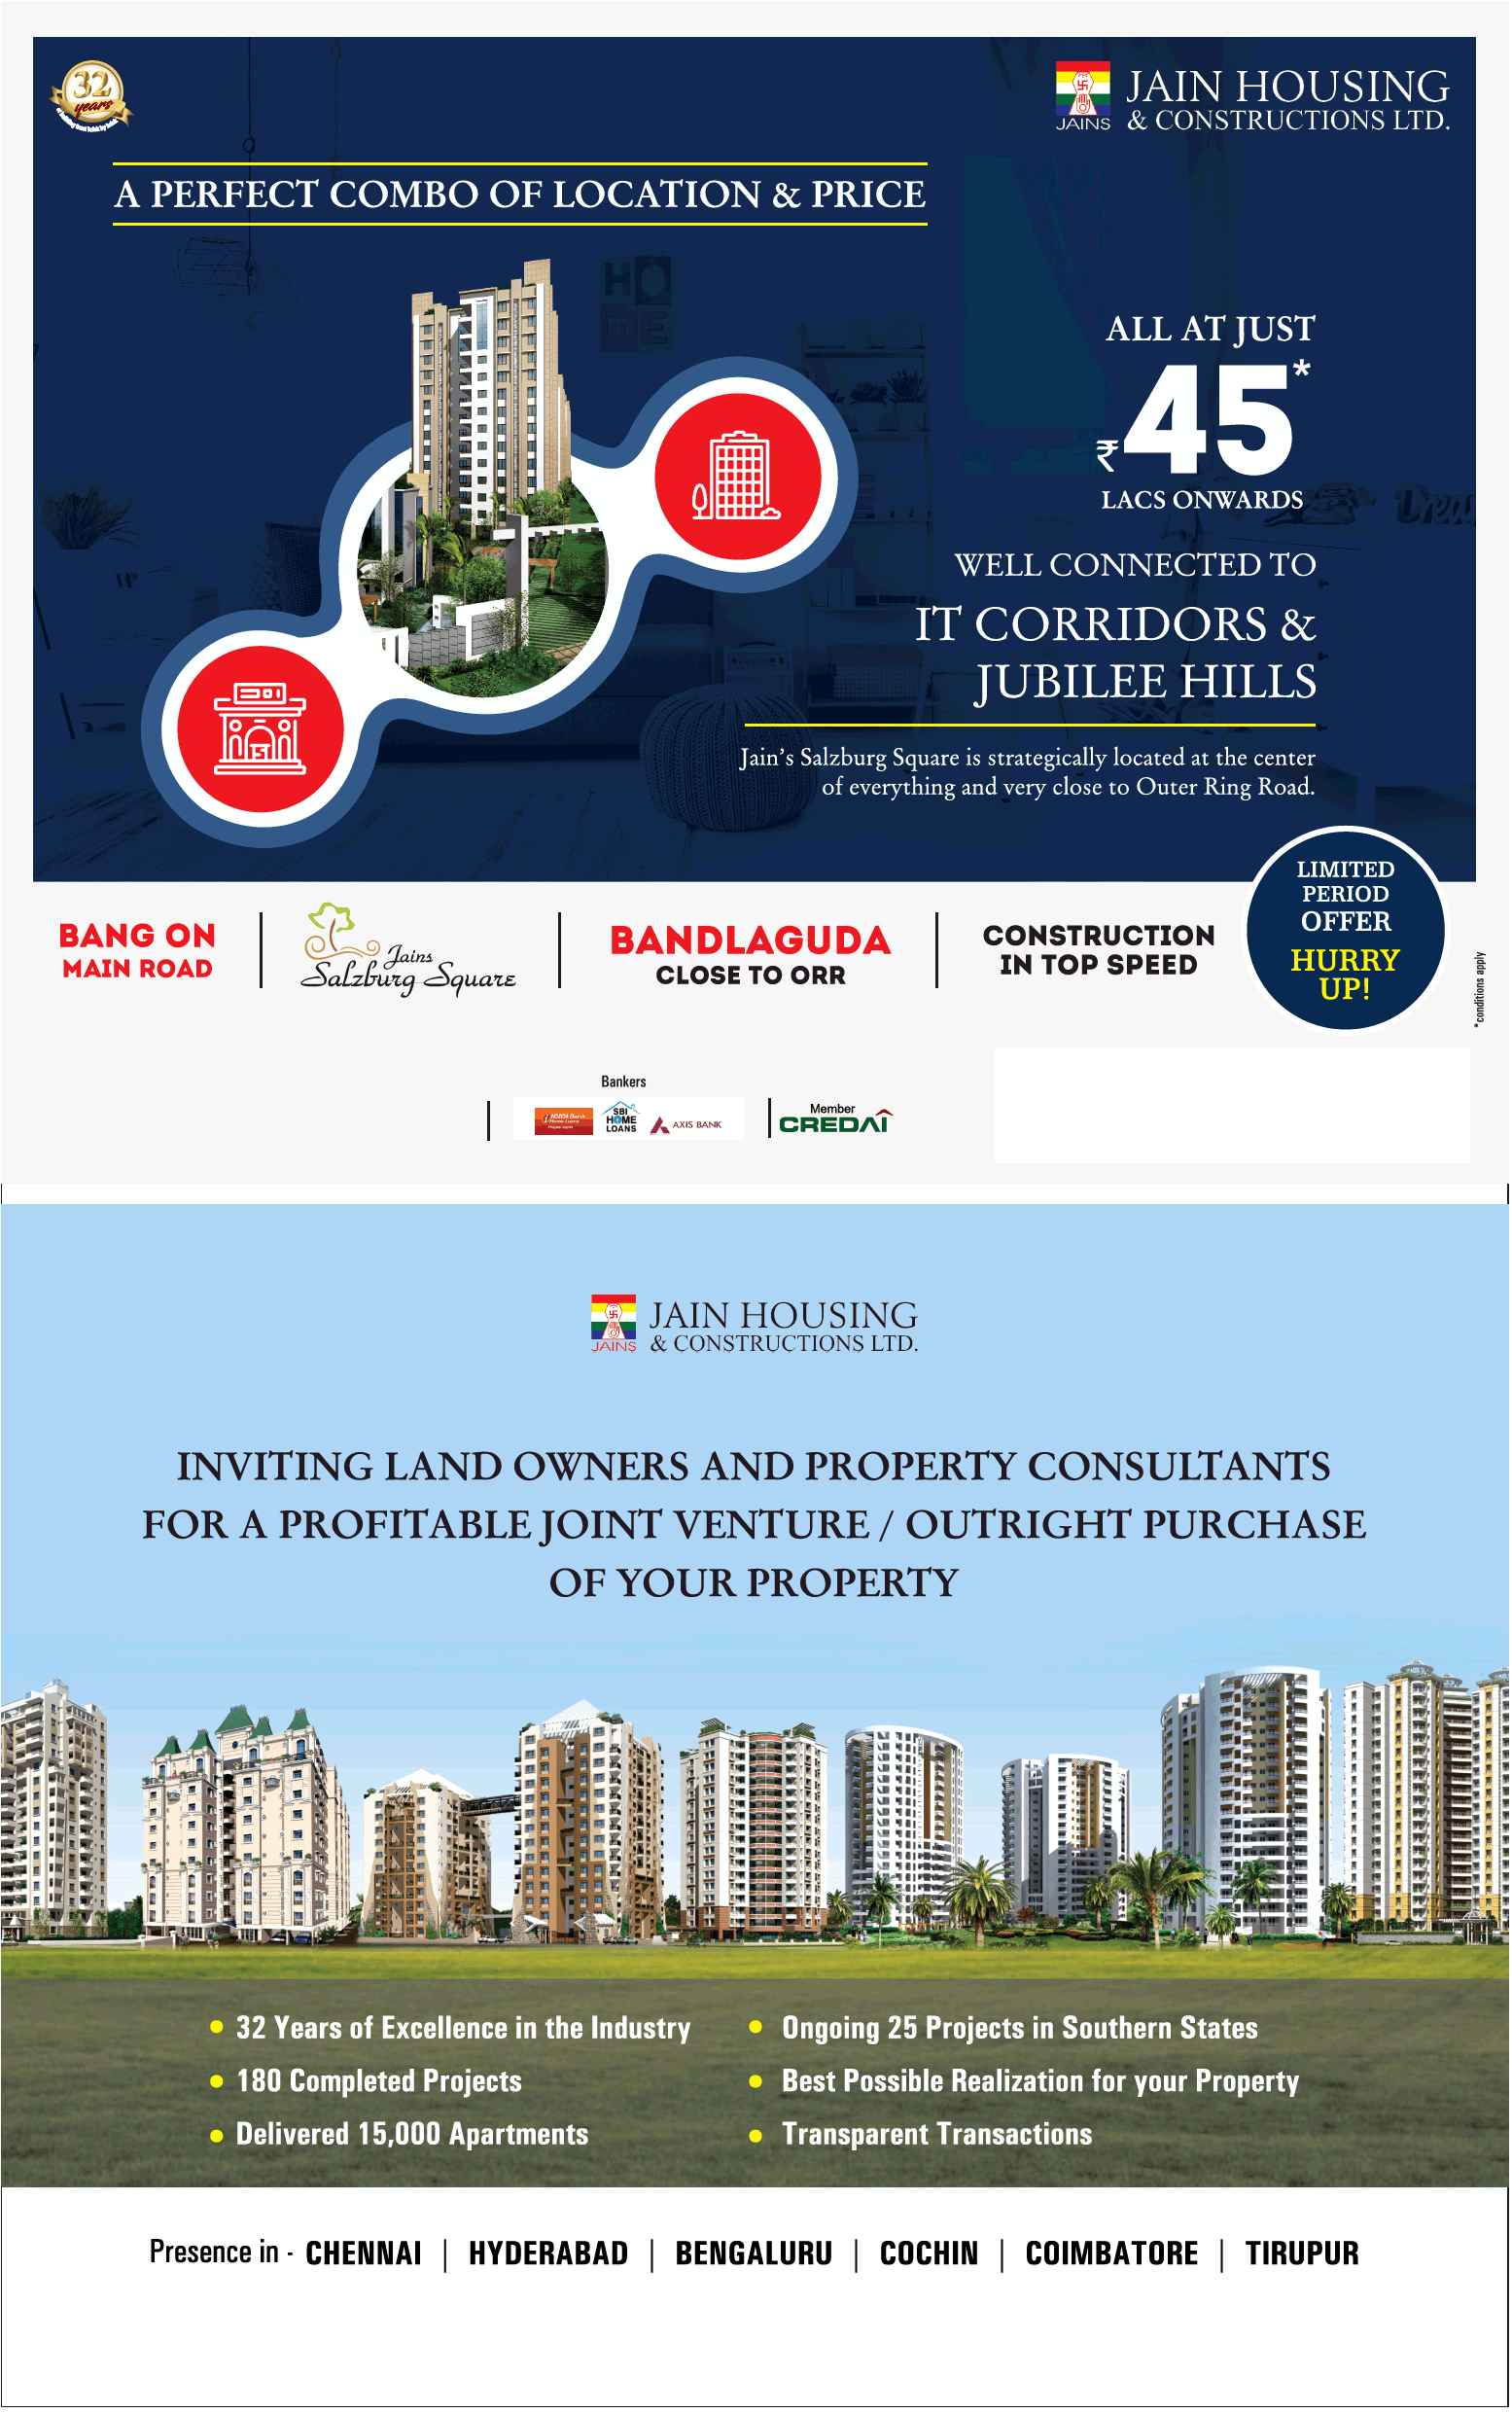 Jain Housing a perfect combo of location & price in Gachibowli, Hyderabad